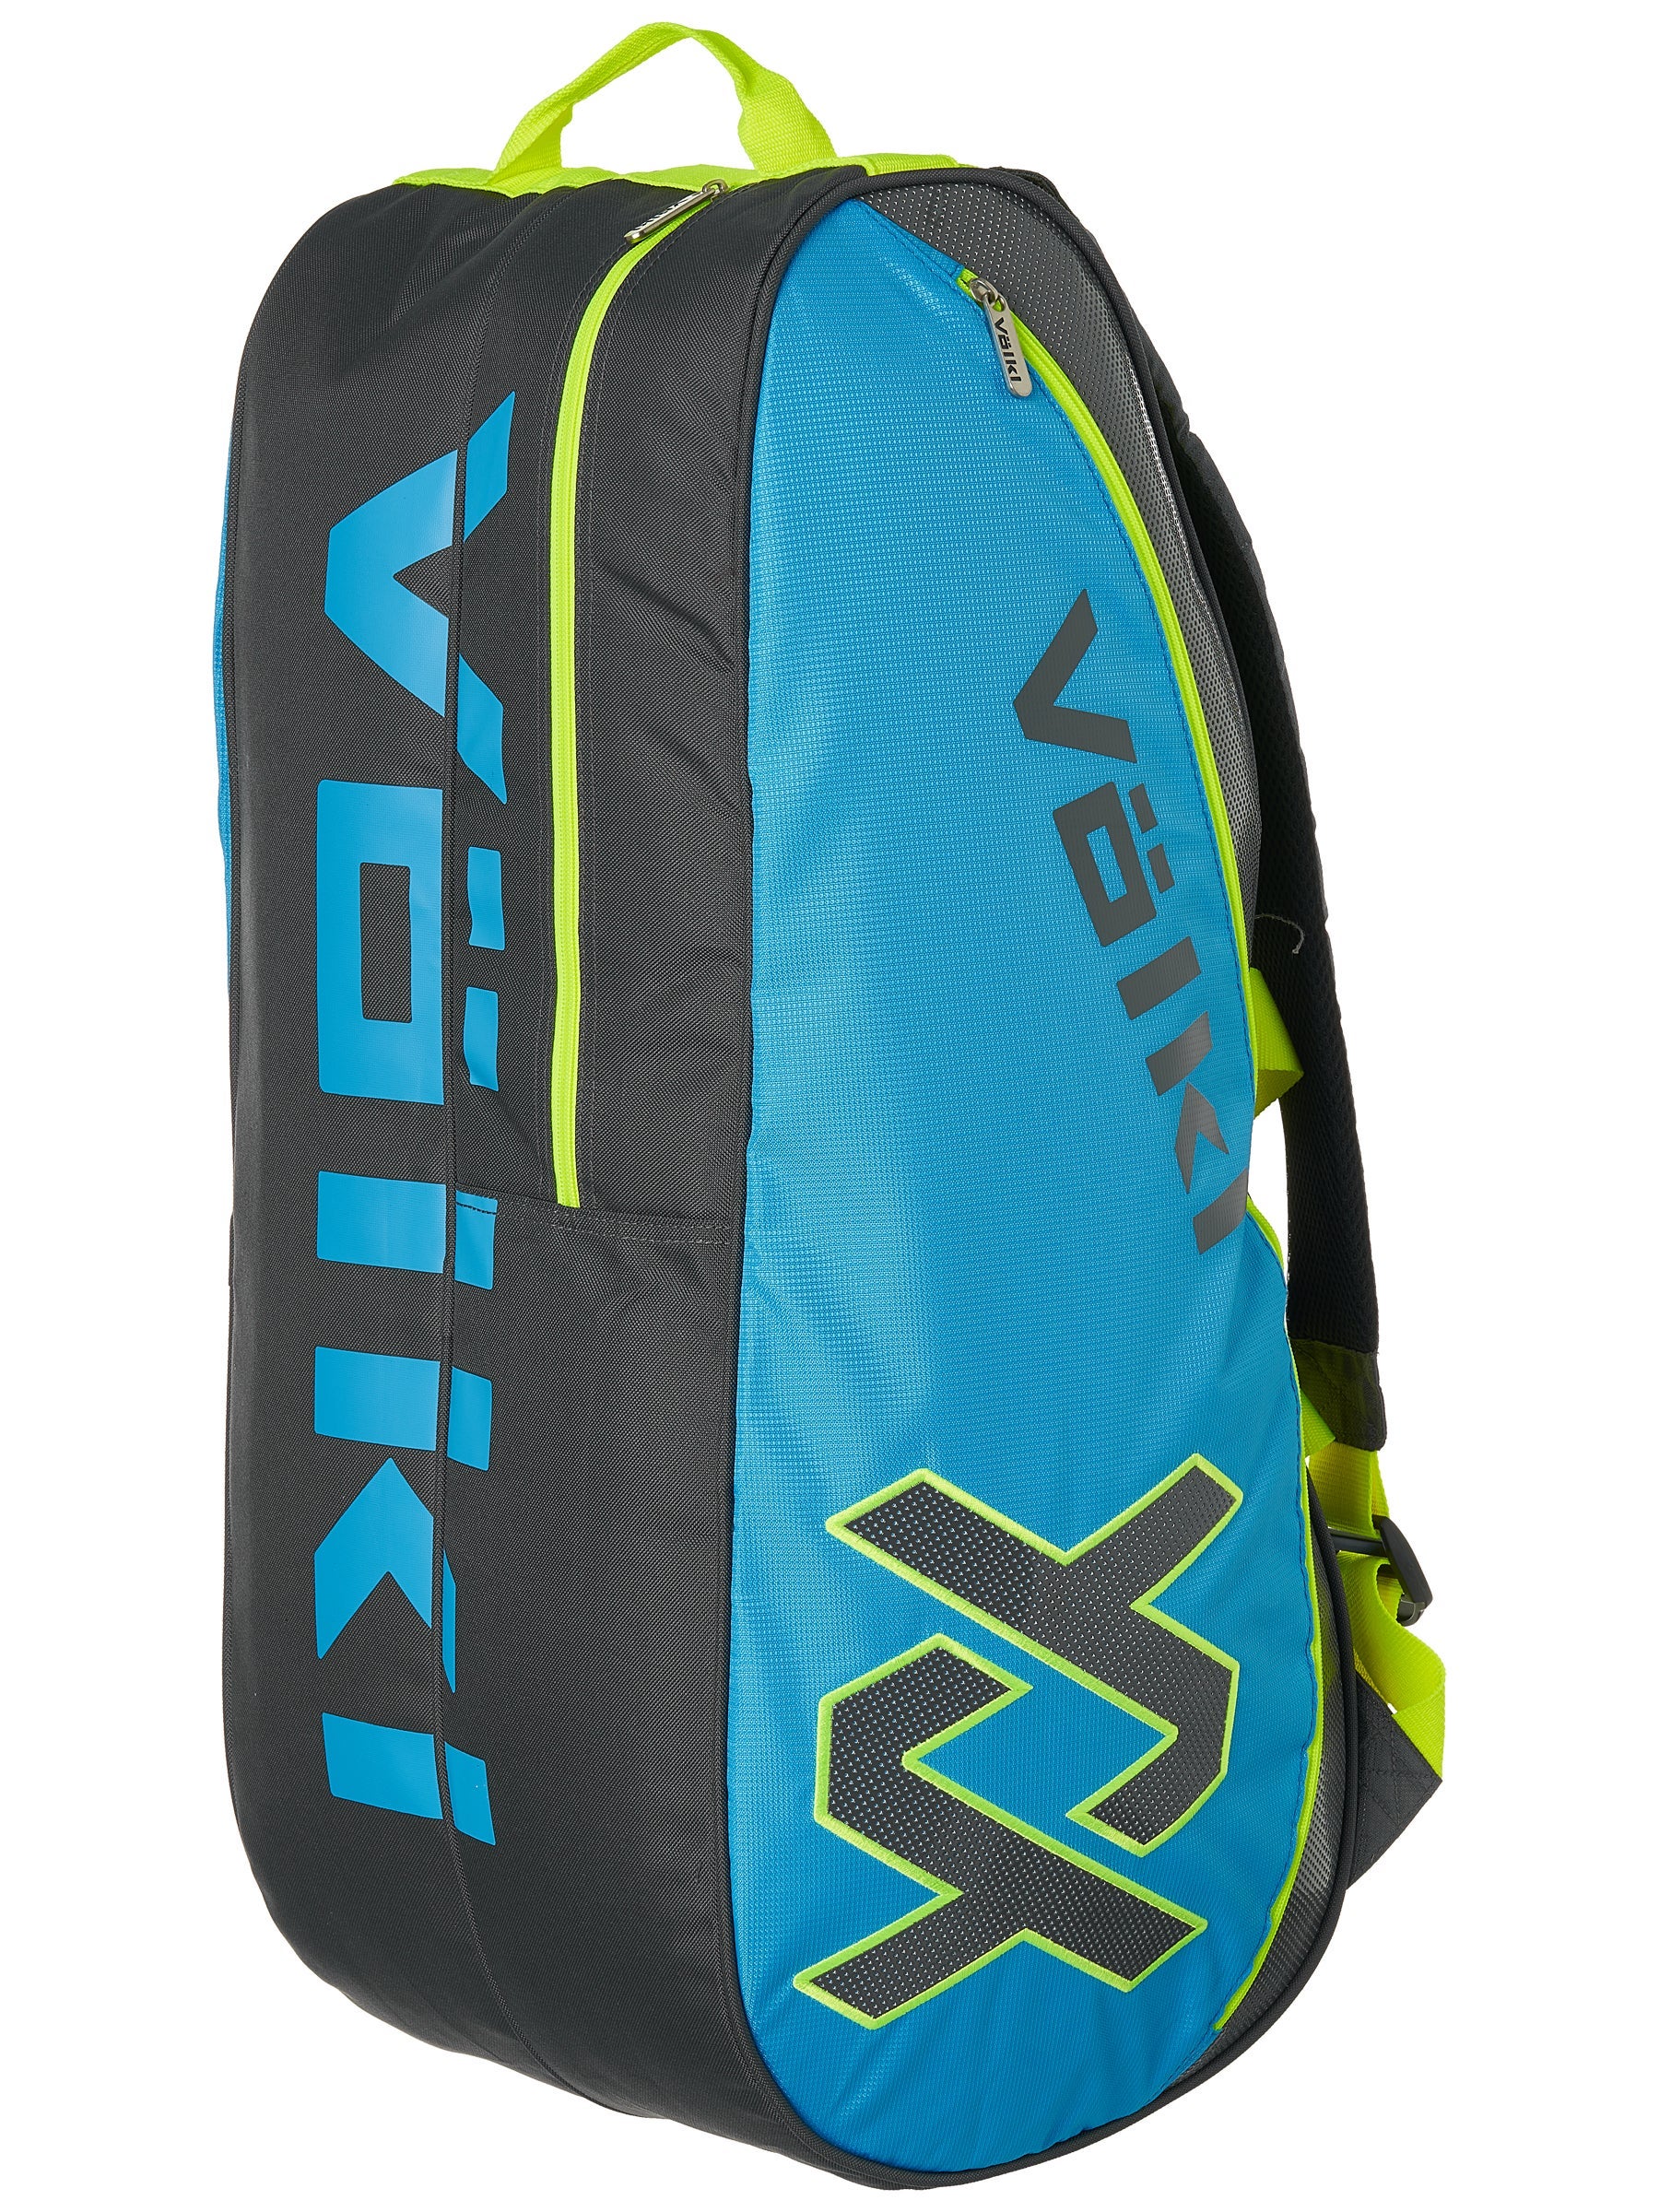 Volkl Team Combi 6 Pack Tennis Racquet Bag Navy and Silver 